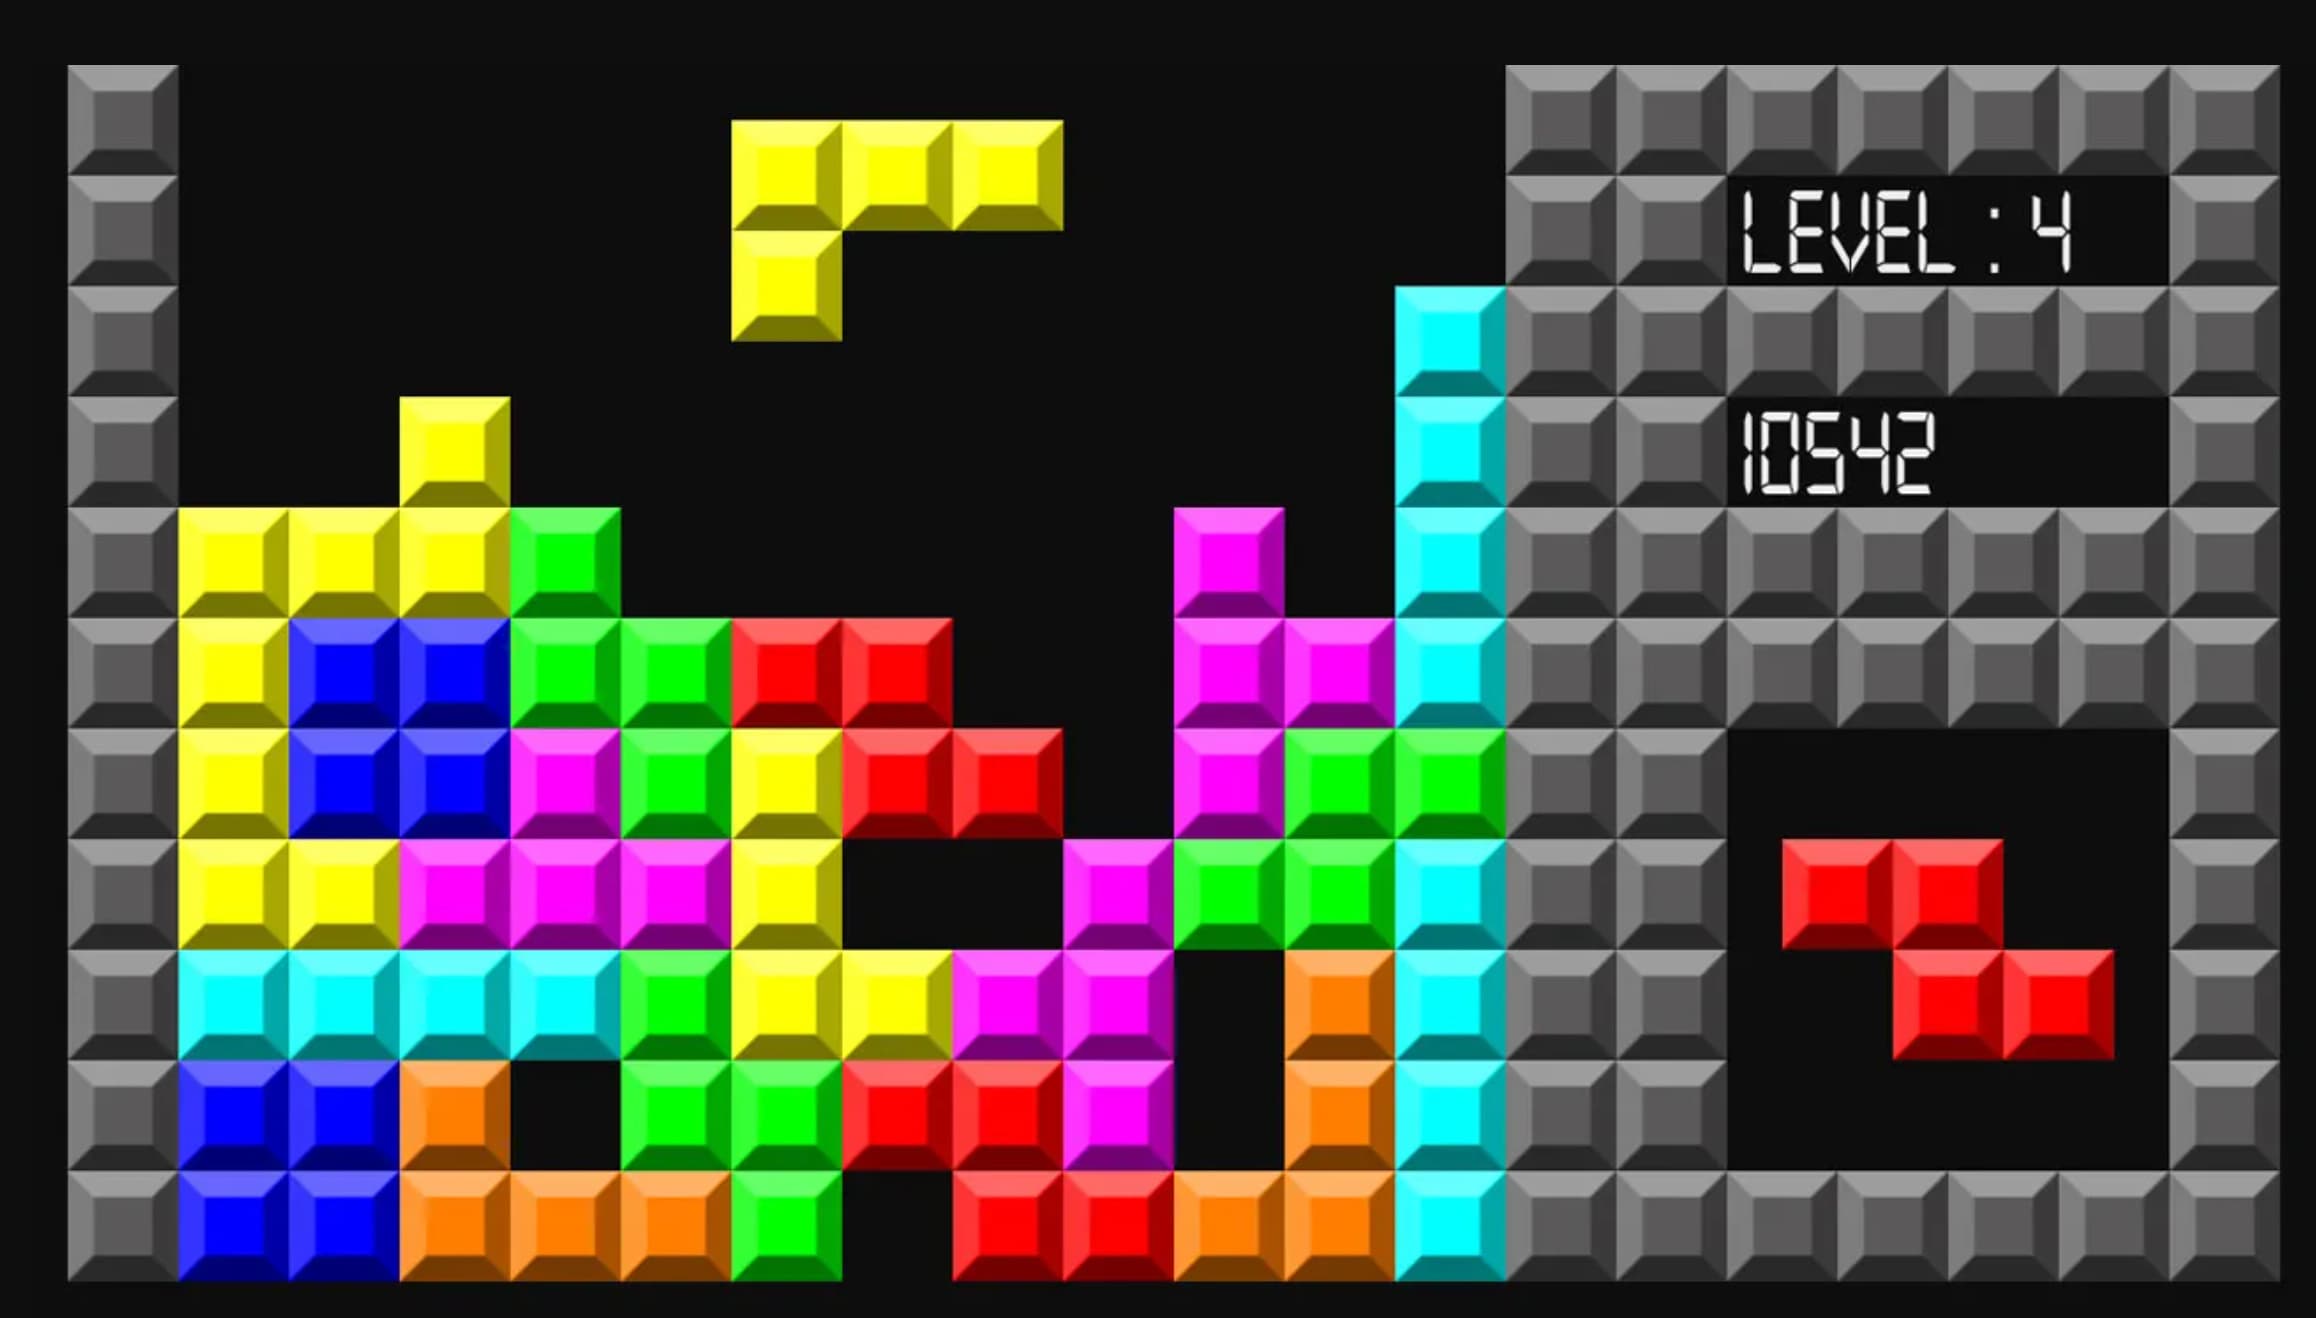 tetris games - Level 4 10542